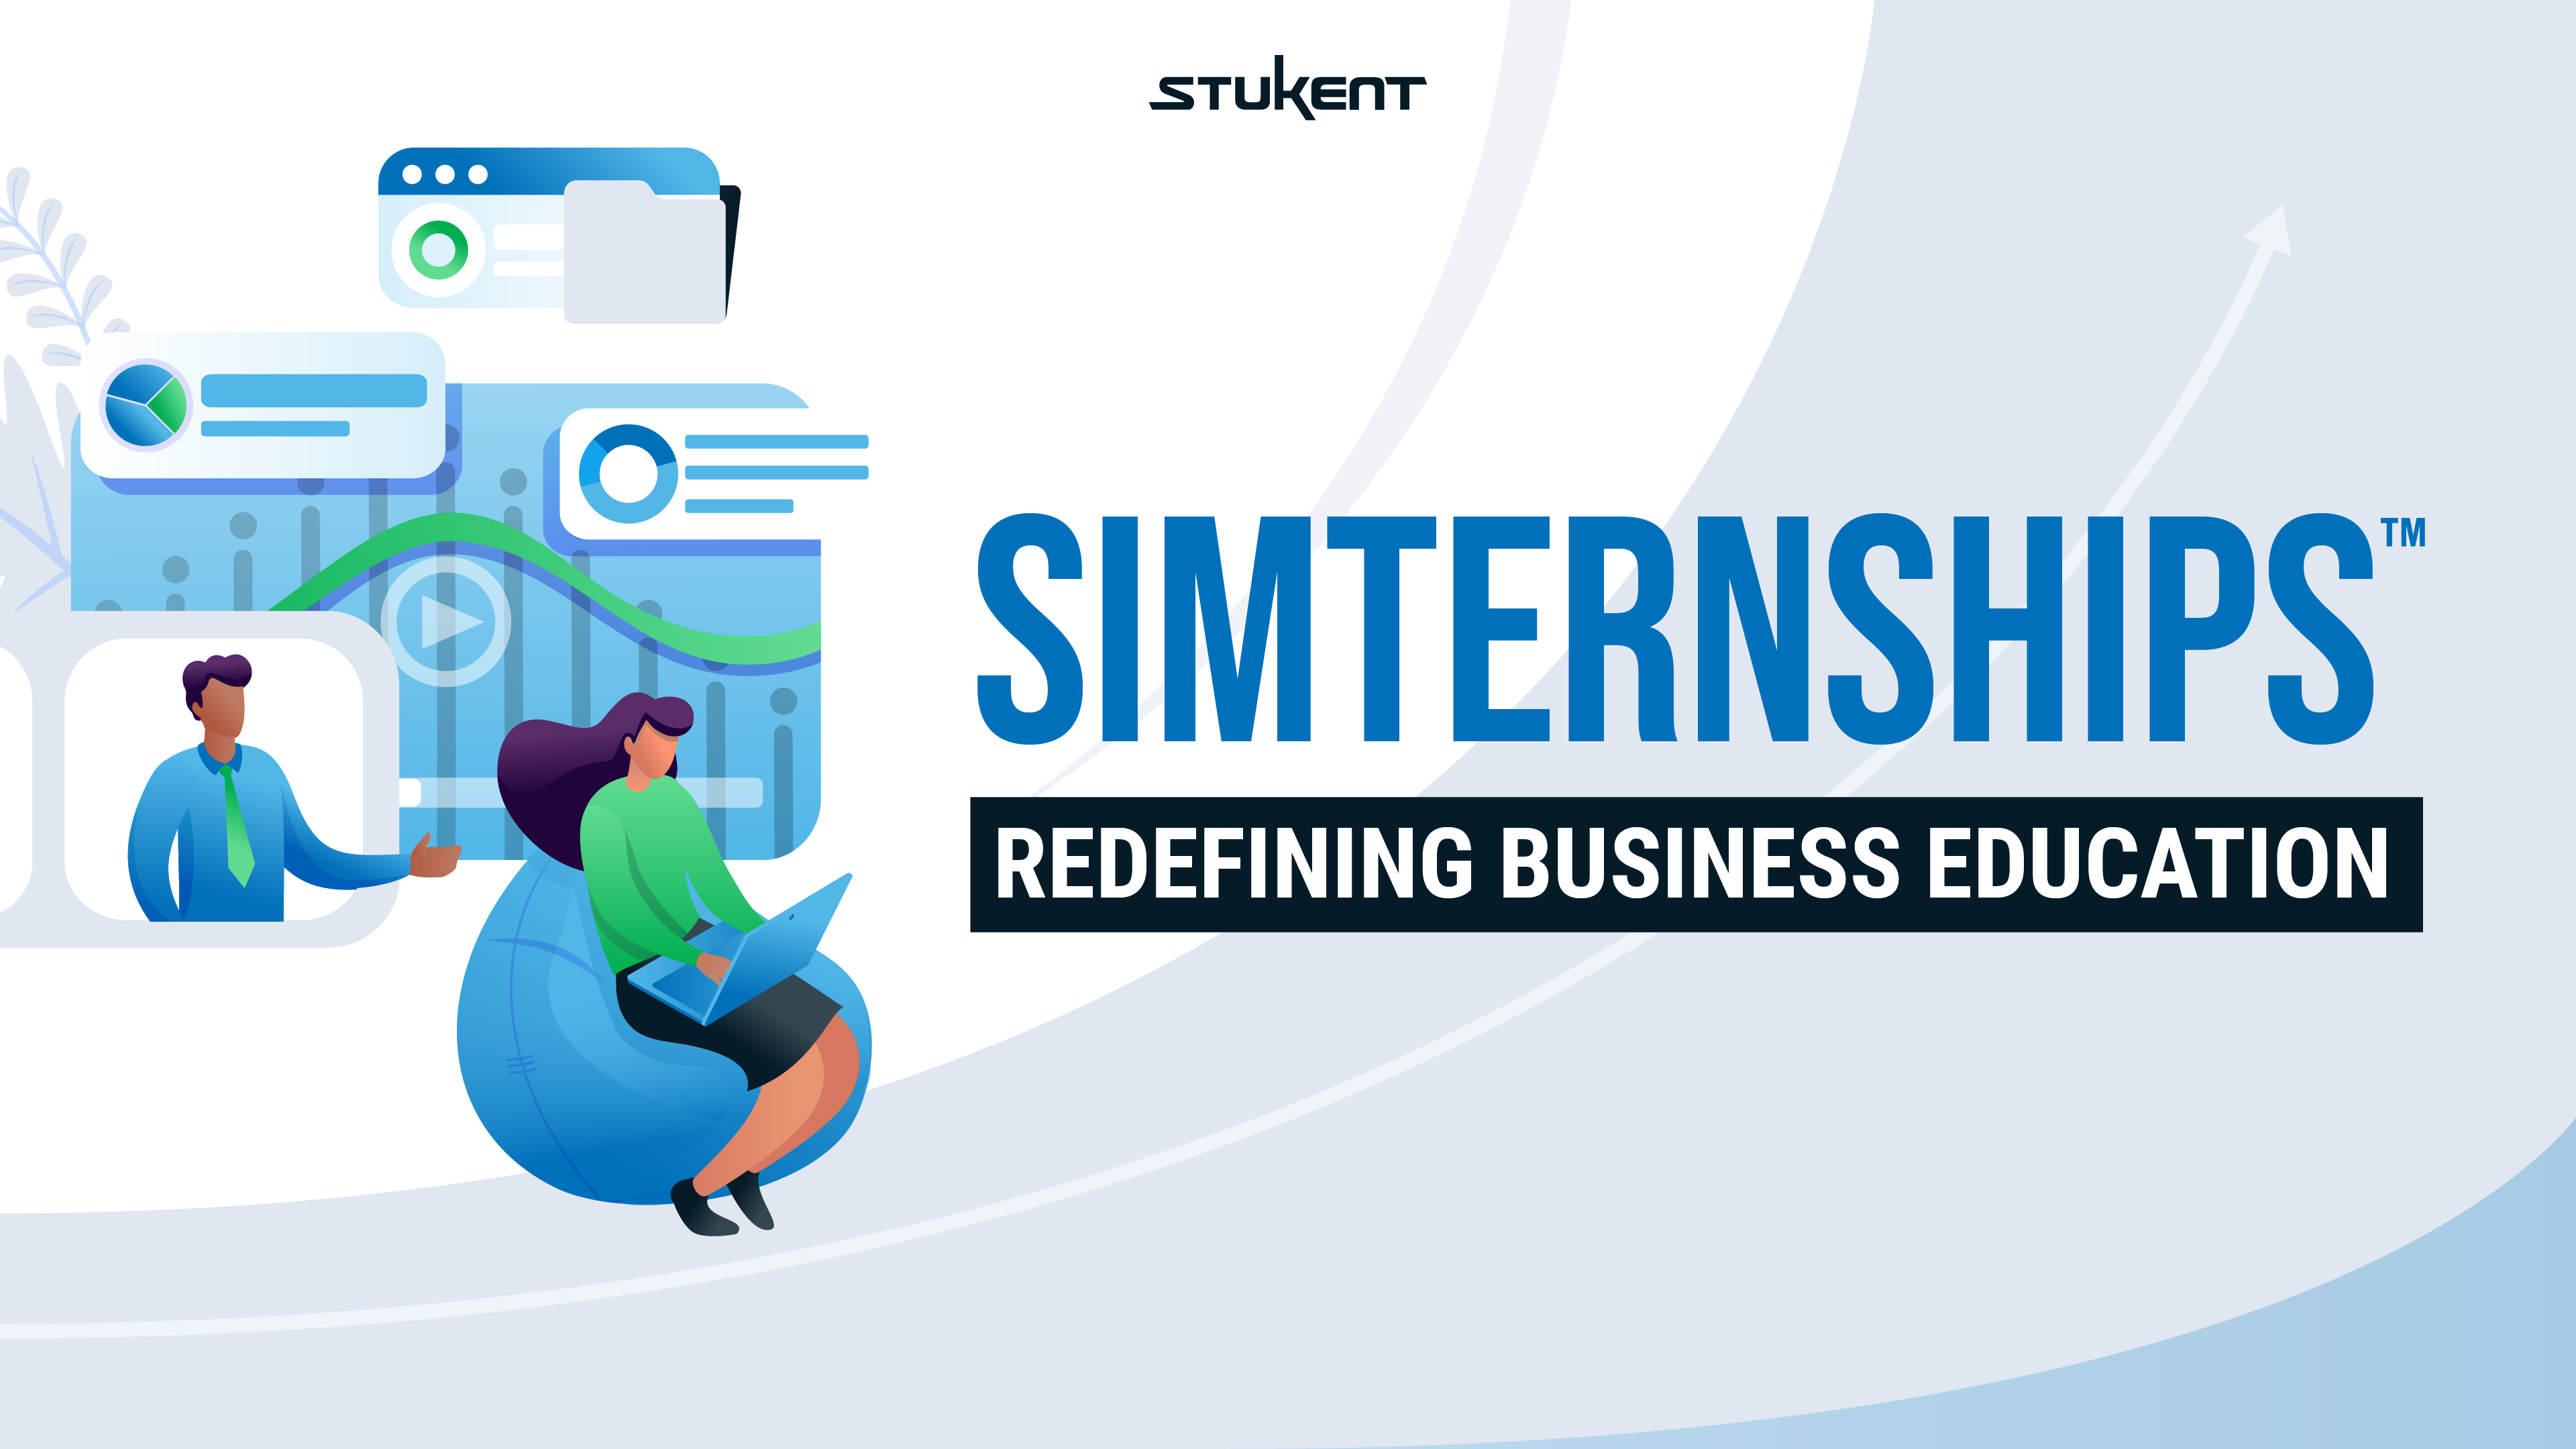 Simternships - Redefining Business Education